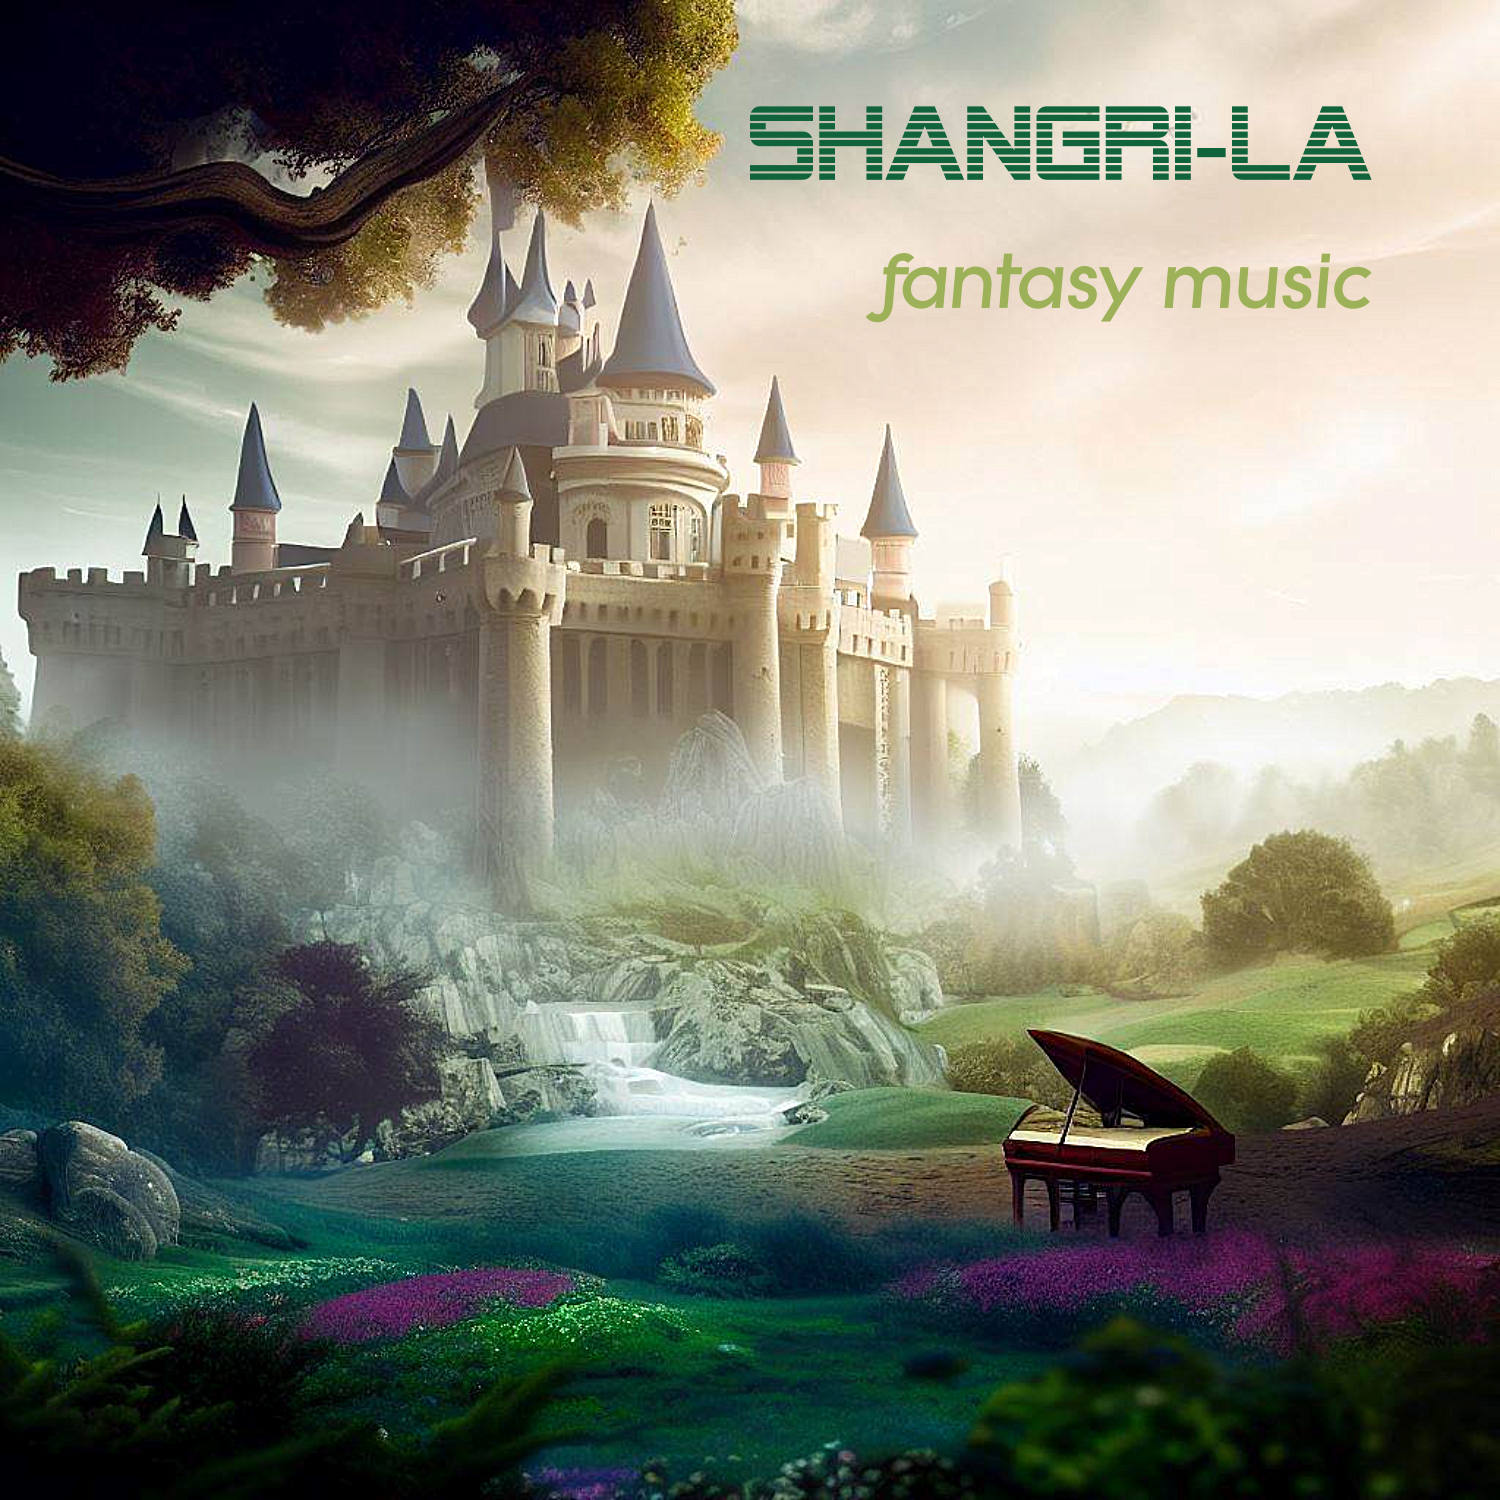 shangri-la fantasy music